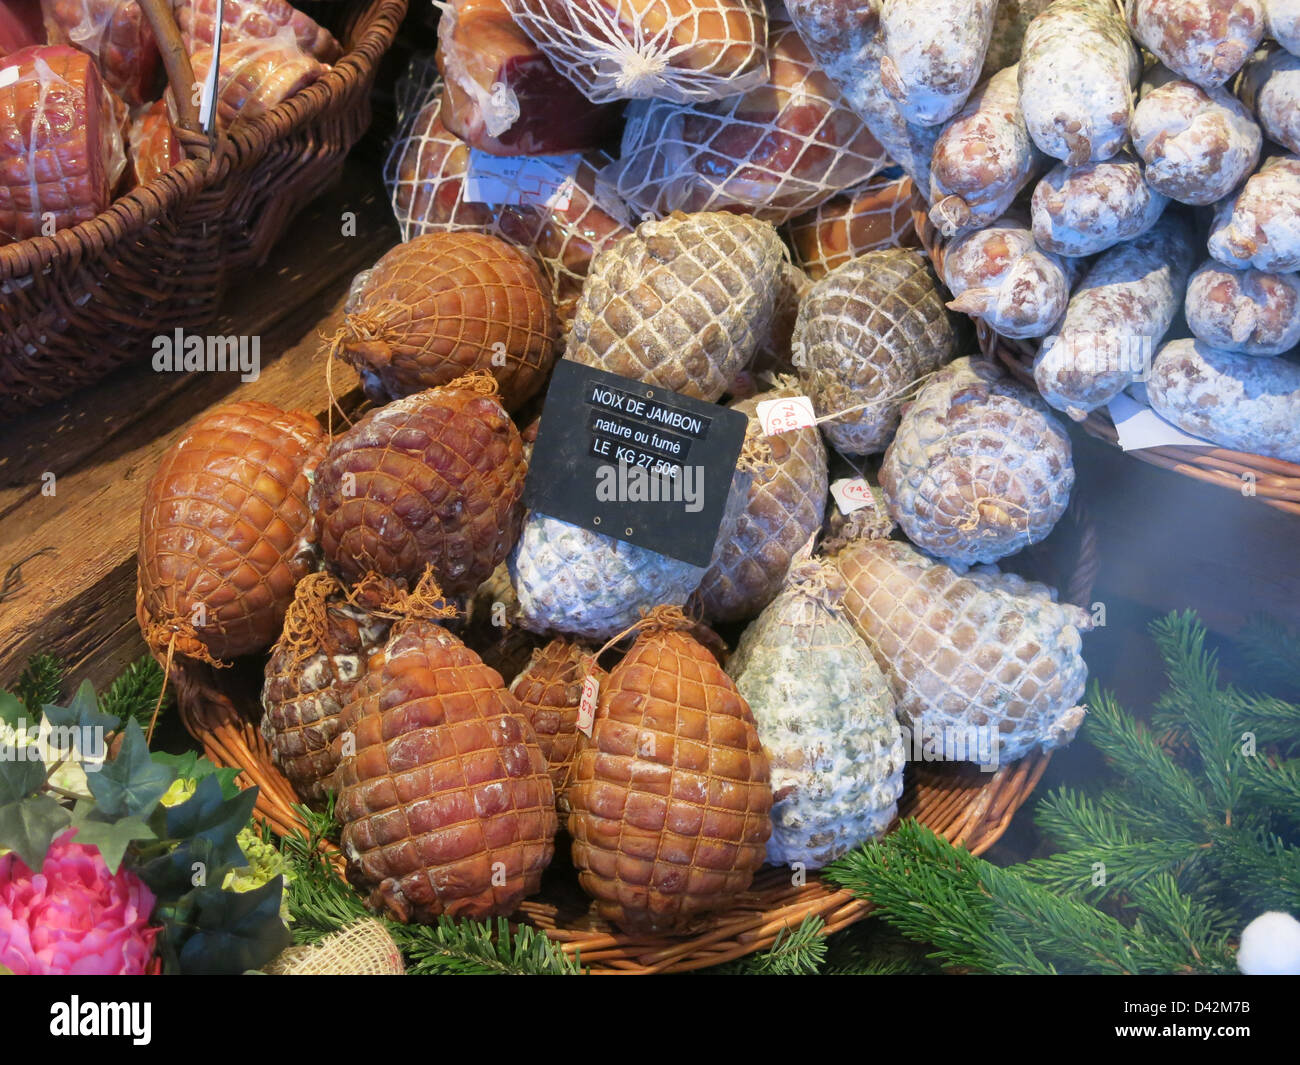 Noix de Jambon, Walnut Ham in Chamonix, France Stock Photo